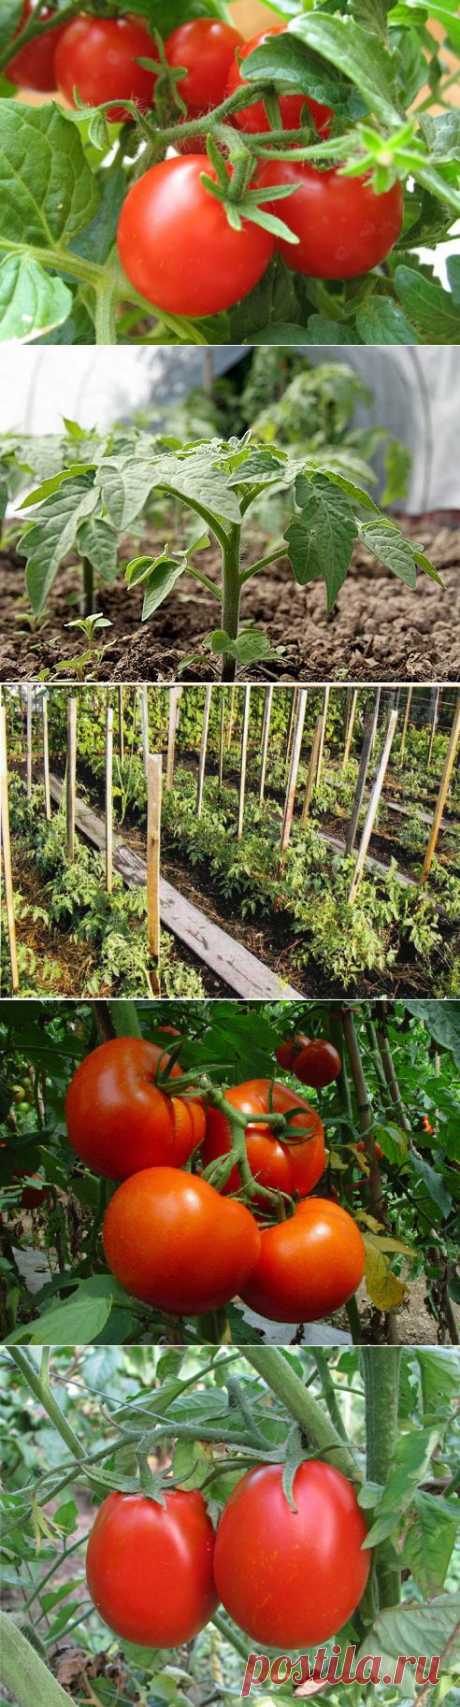 Сорта томатов. Посадка и уход за томатами, вредители и болезни.